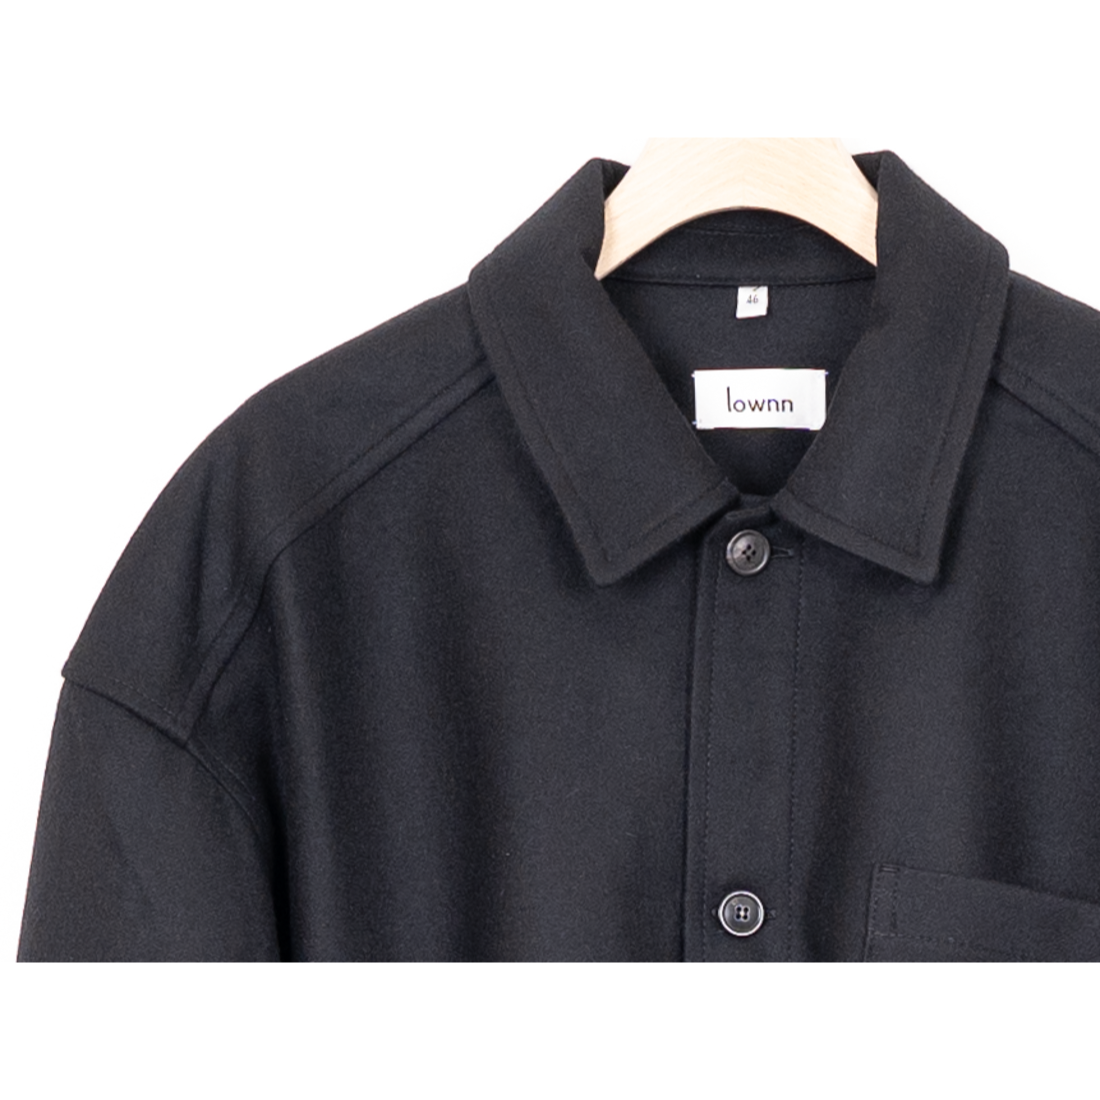 lownn / Split Shirt Chemise Ouverte (Fendue)（flannel wool）